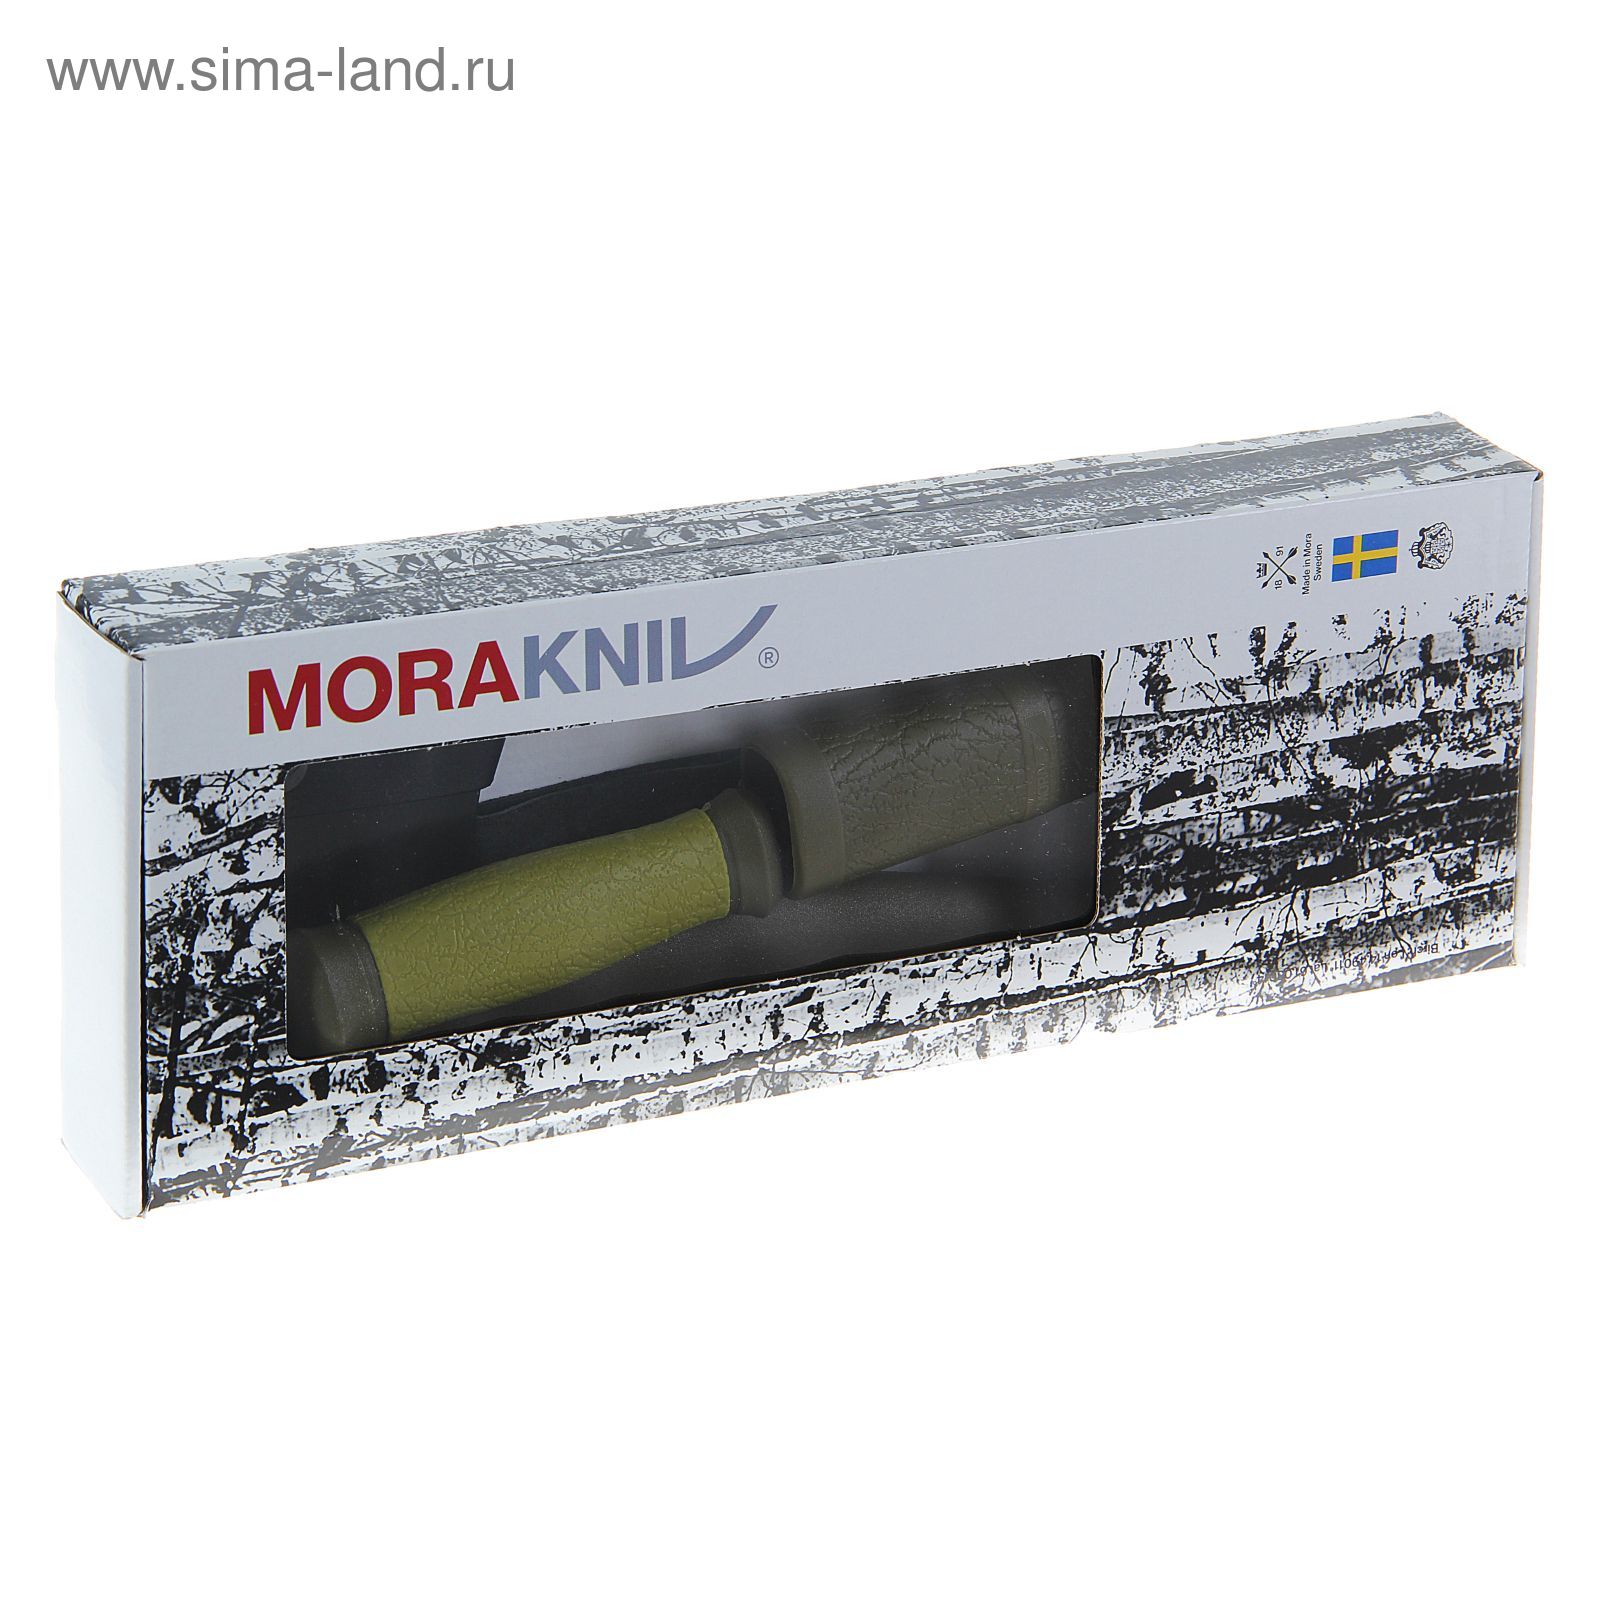 Набор Morakniv Outdoor Kit MG, нож Mora 2000 + топор, сталь Sandvik 12C27